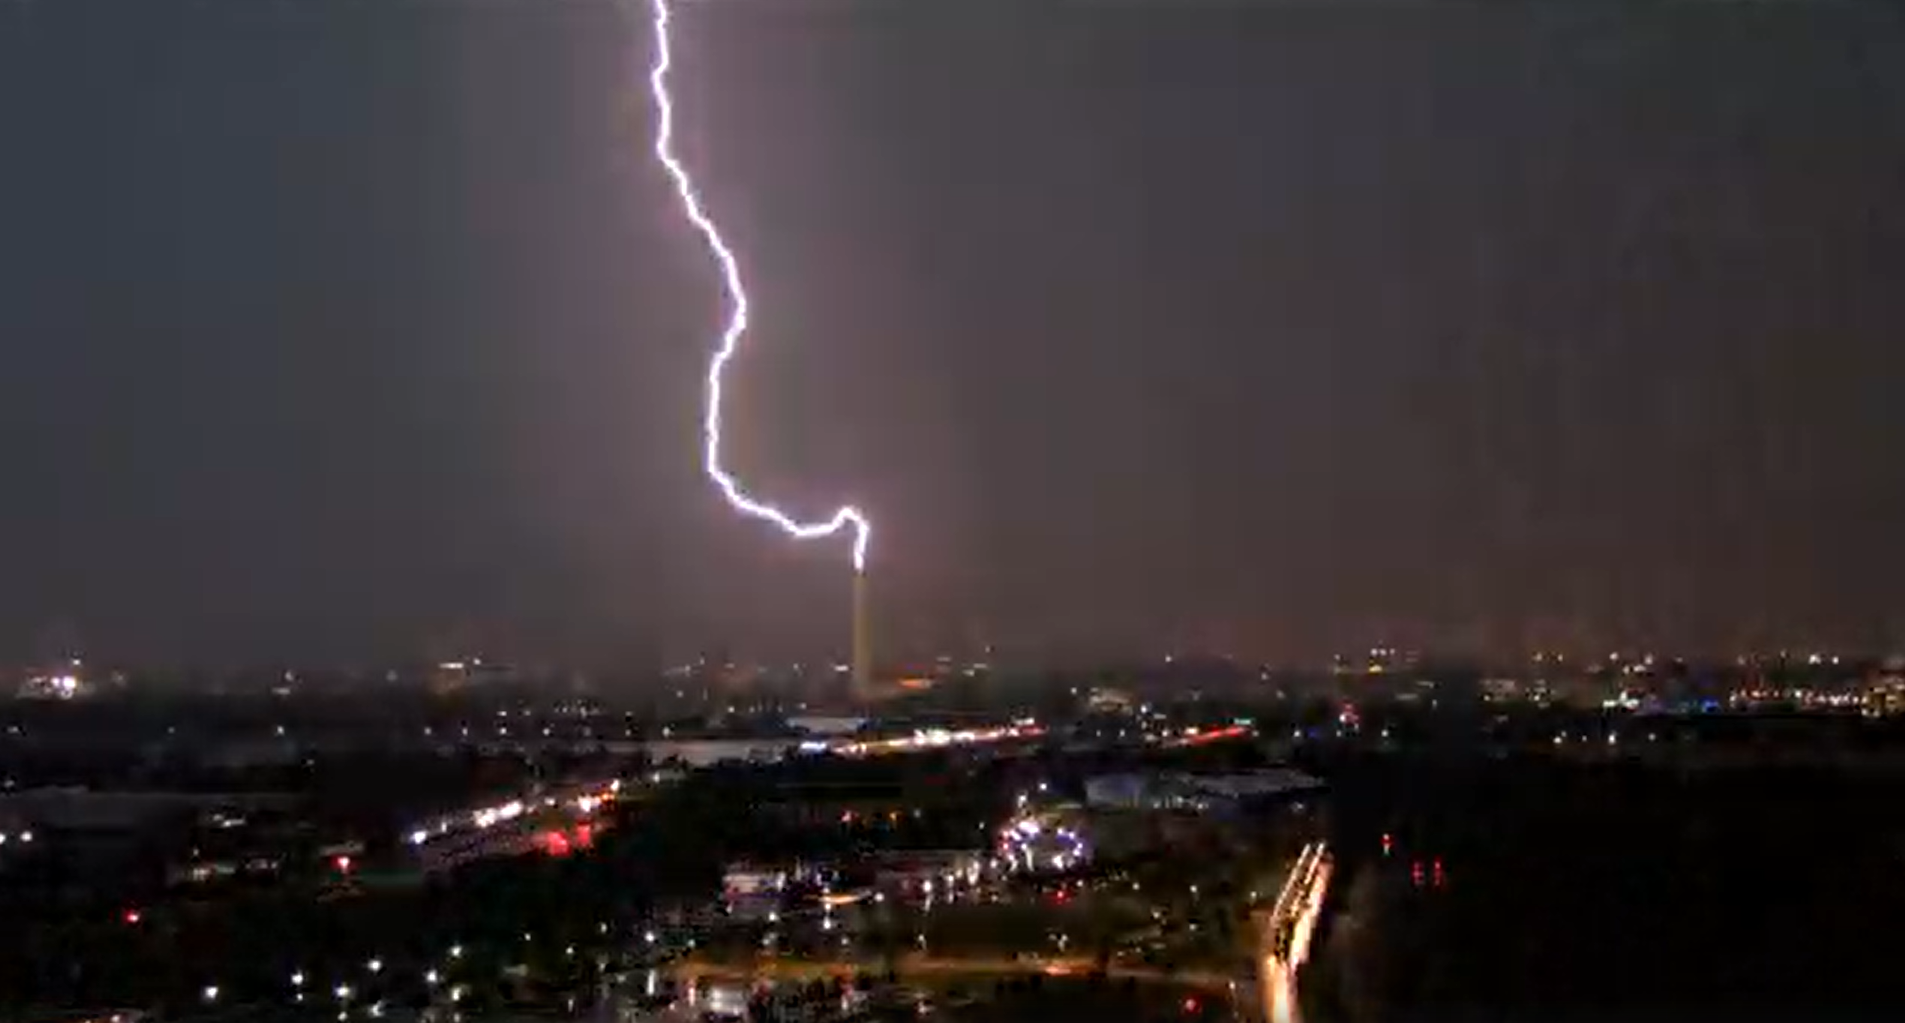 VIDEO: Washington Monument lovit de fulger. Imagini spectaculoase